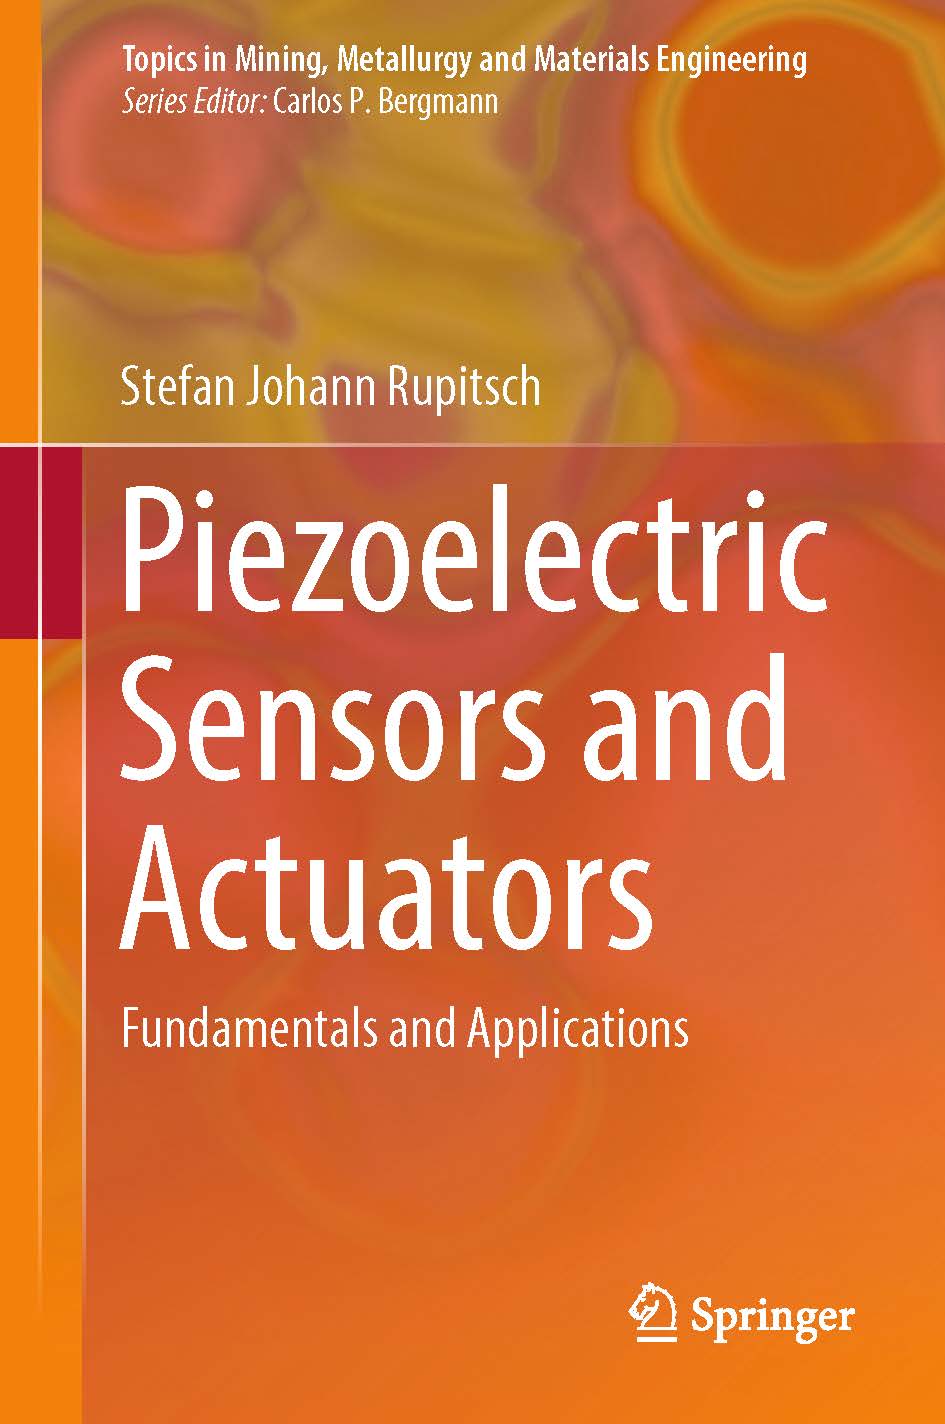 页面提取自－2019_Book_Piezoelectric Sensors and Actuators.jpg